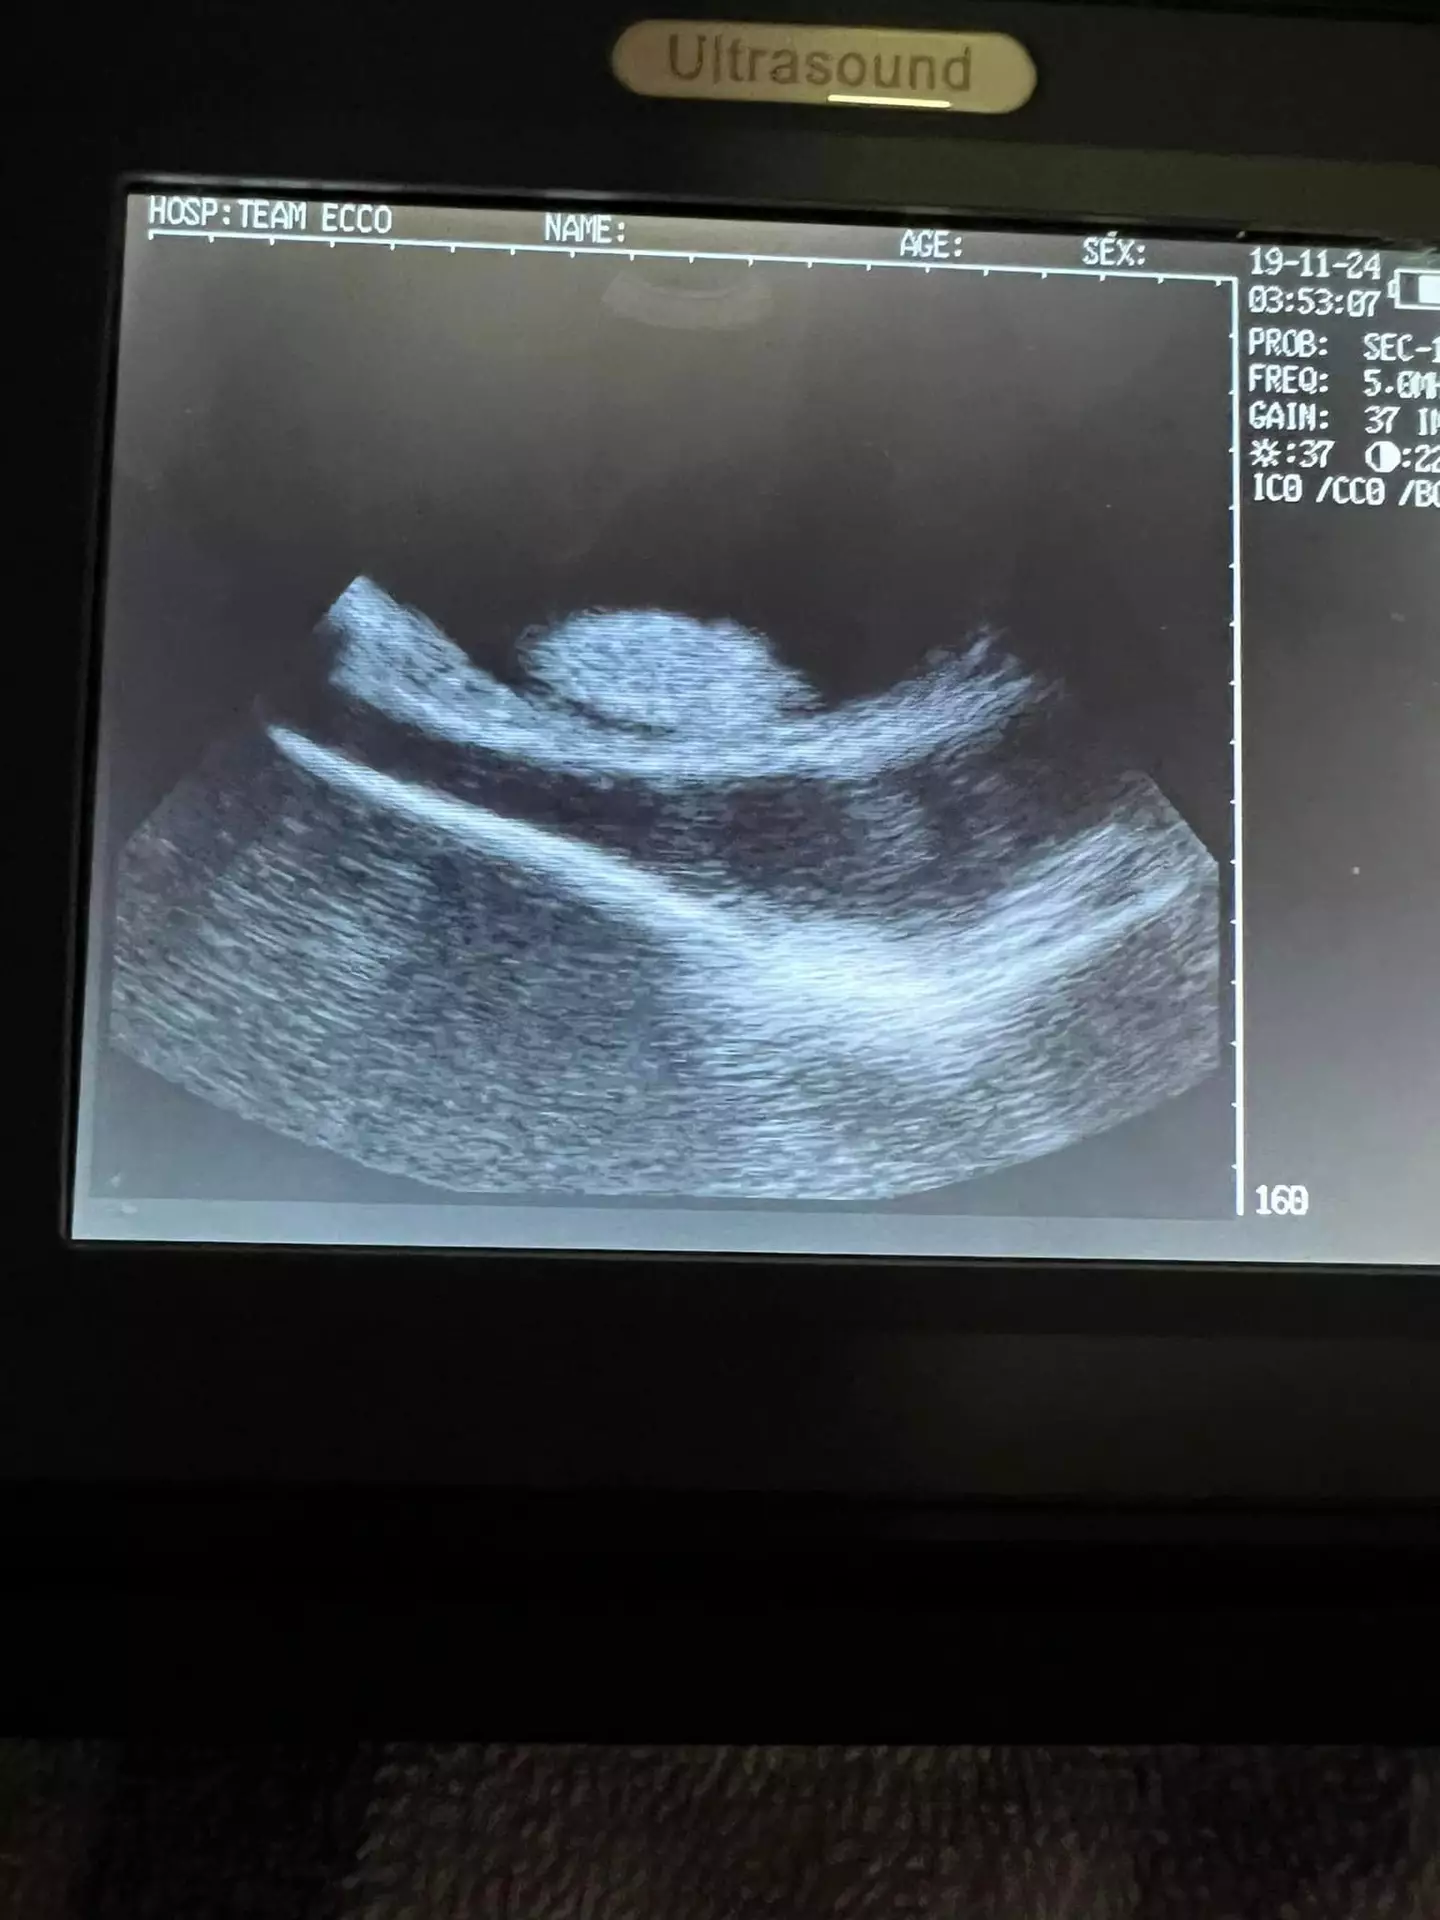 Charlotte's ultrasound.